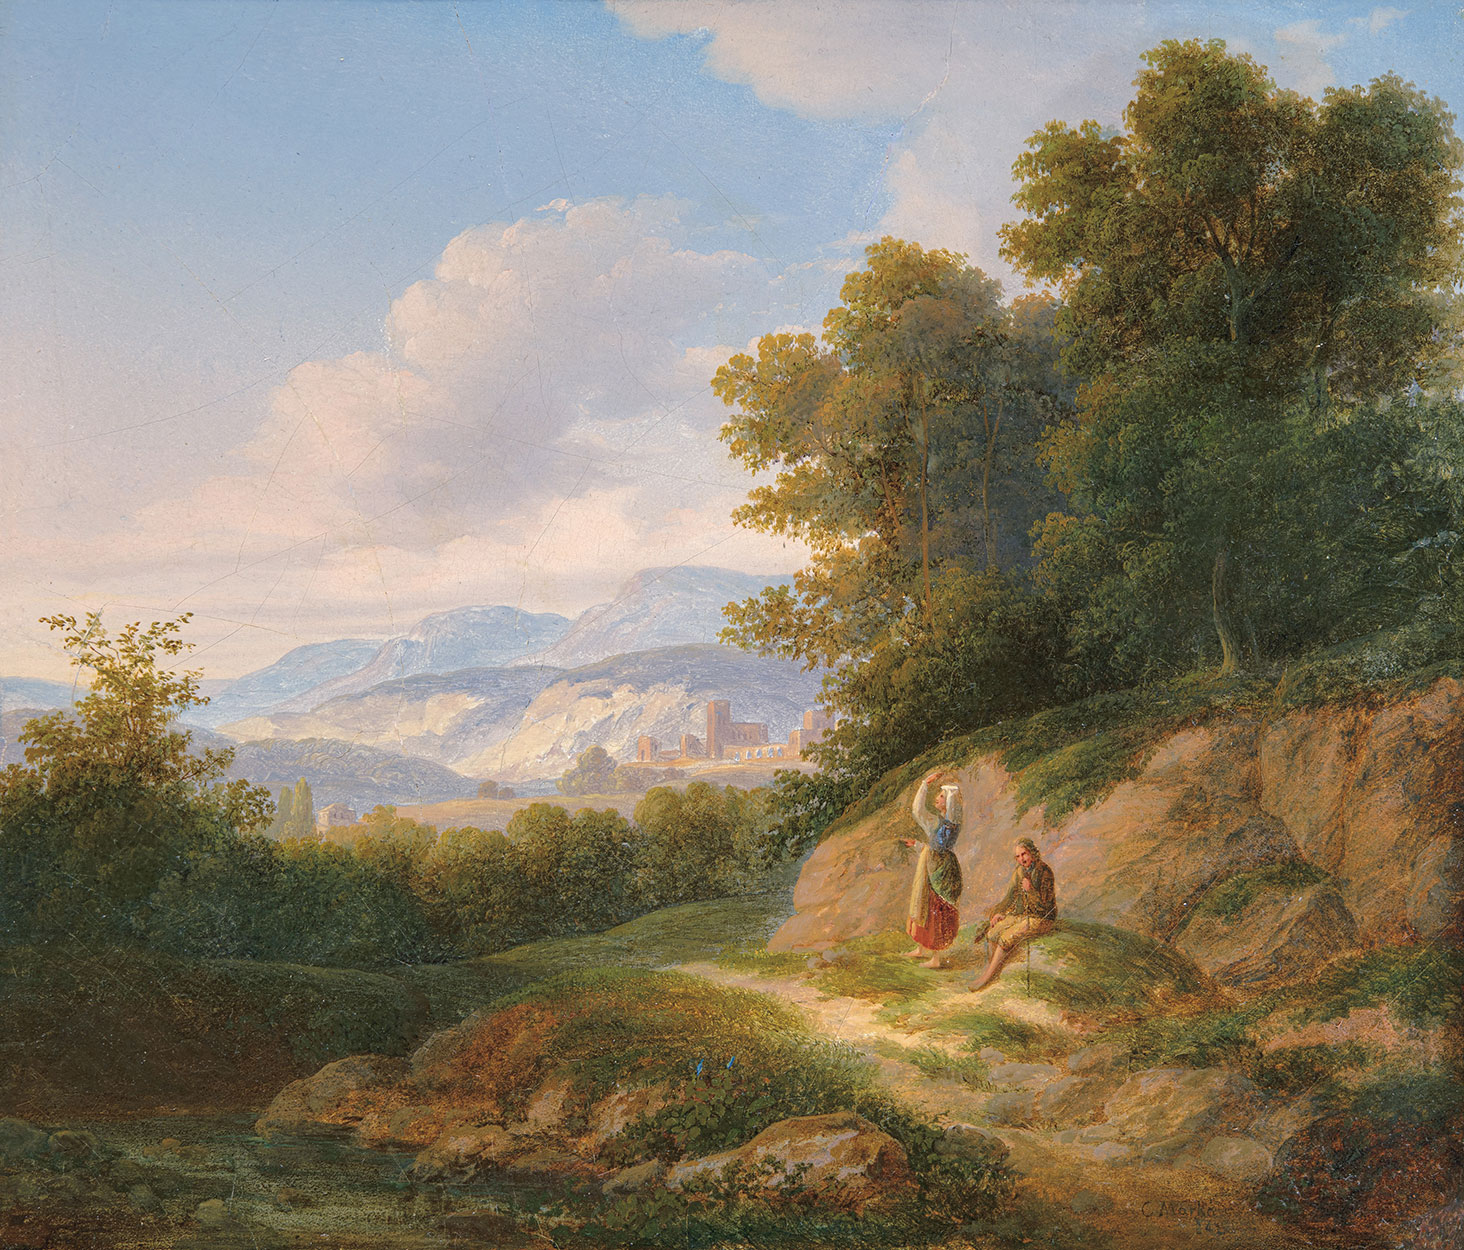 Markó Károly, Ifj. (1822 - 1891) Italian Landscape, 1842